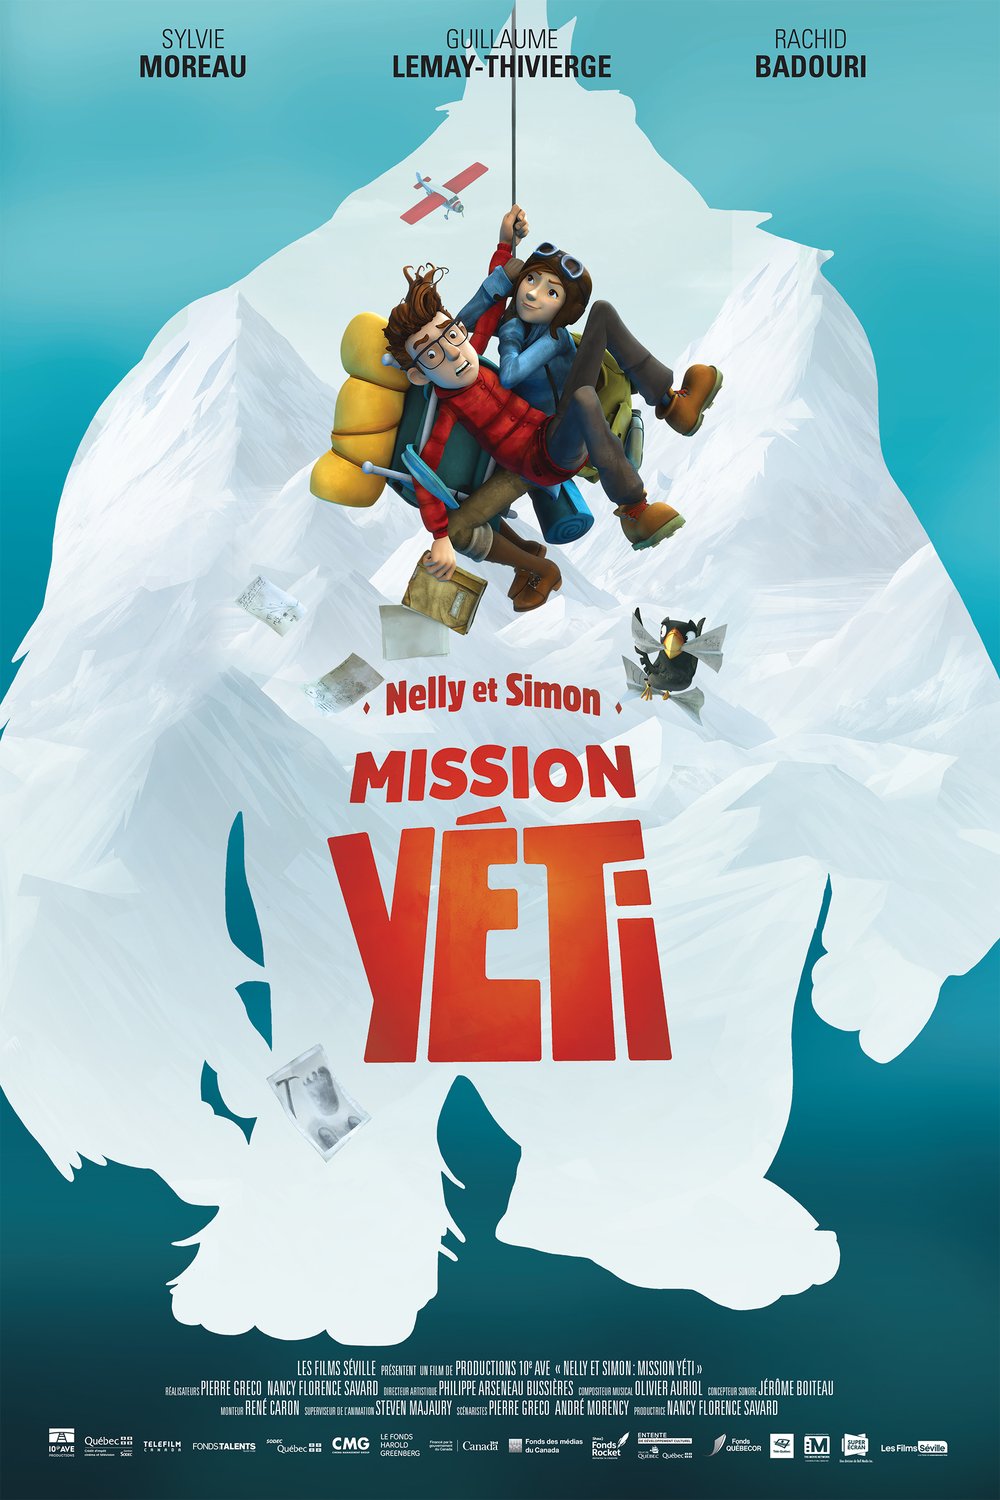 Poster of the movie Nelly et Simon: Mission Yéti v.f.